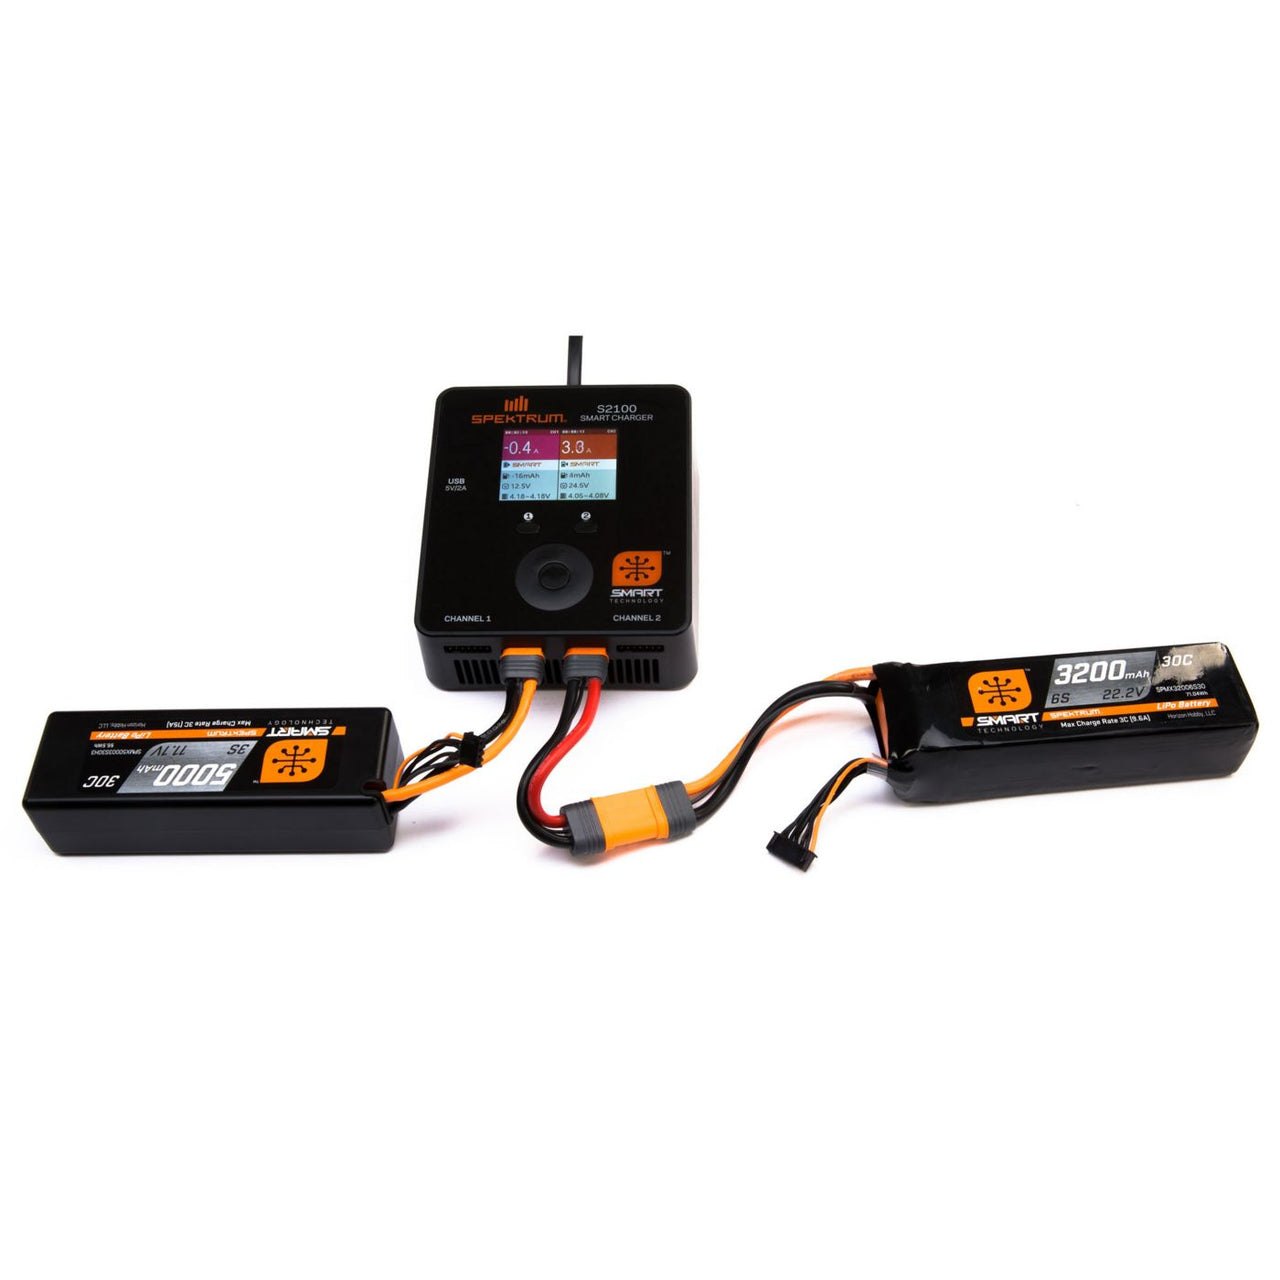 SPMX50003S30H3 11.1V 5000mAh 3S 30C Smart Hardcase LiPo Battery: IC3